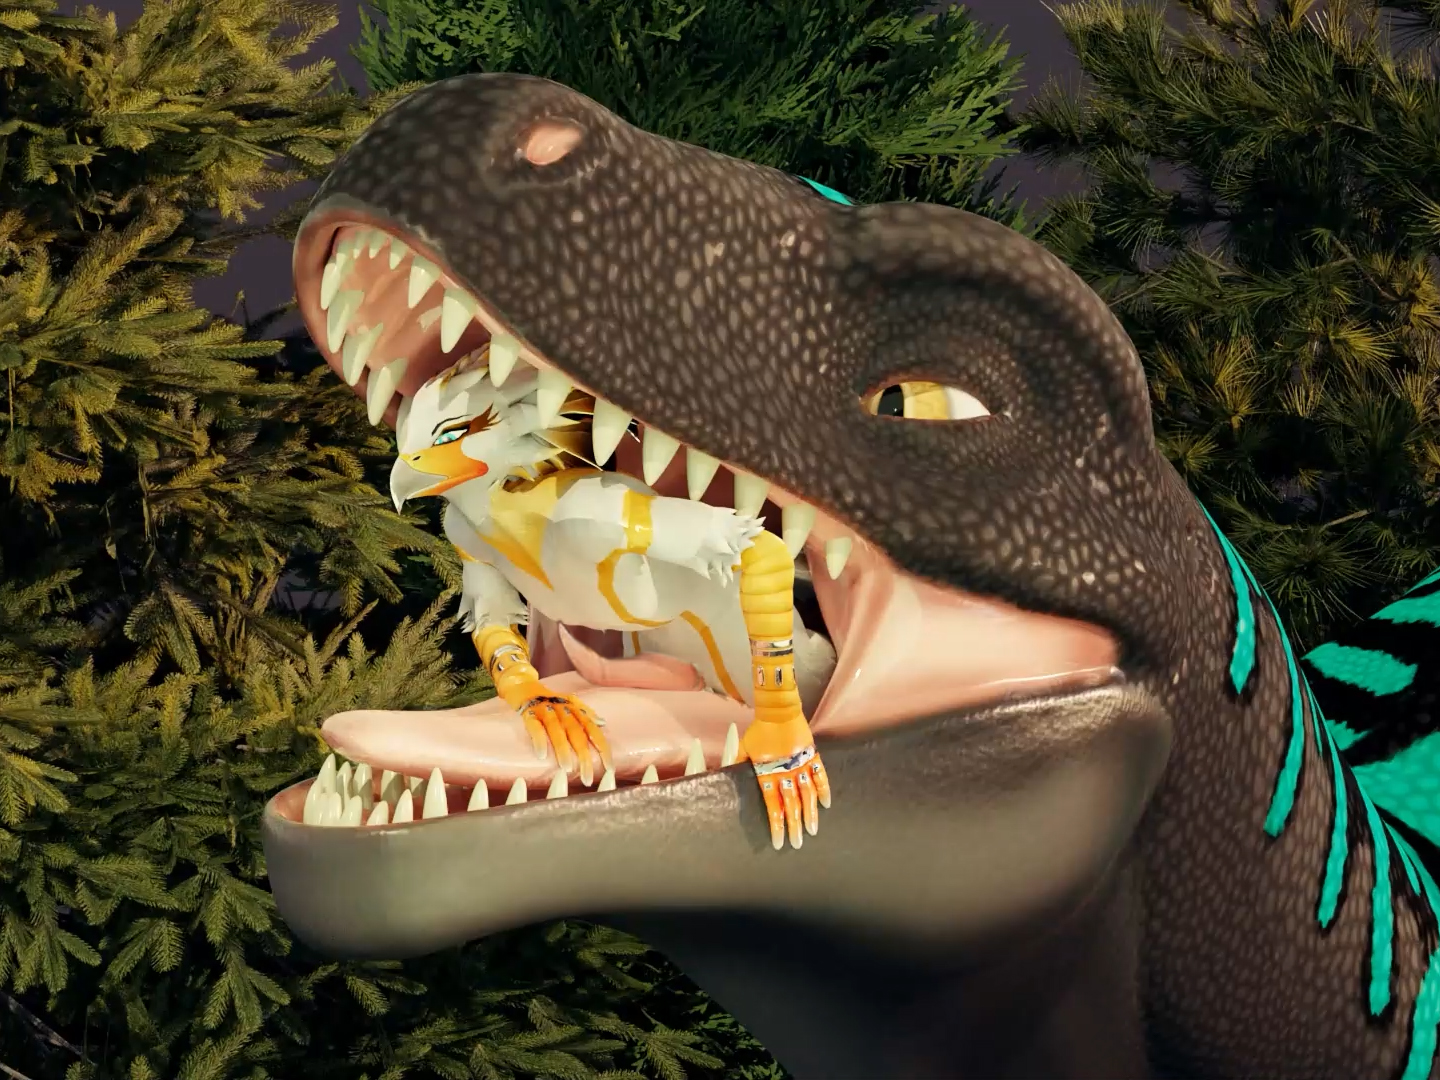 1440px x 1080px - Dinosaur Vore Day Animation (Oral Vore Masturbation) - ThisVid.com